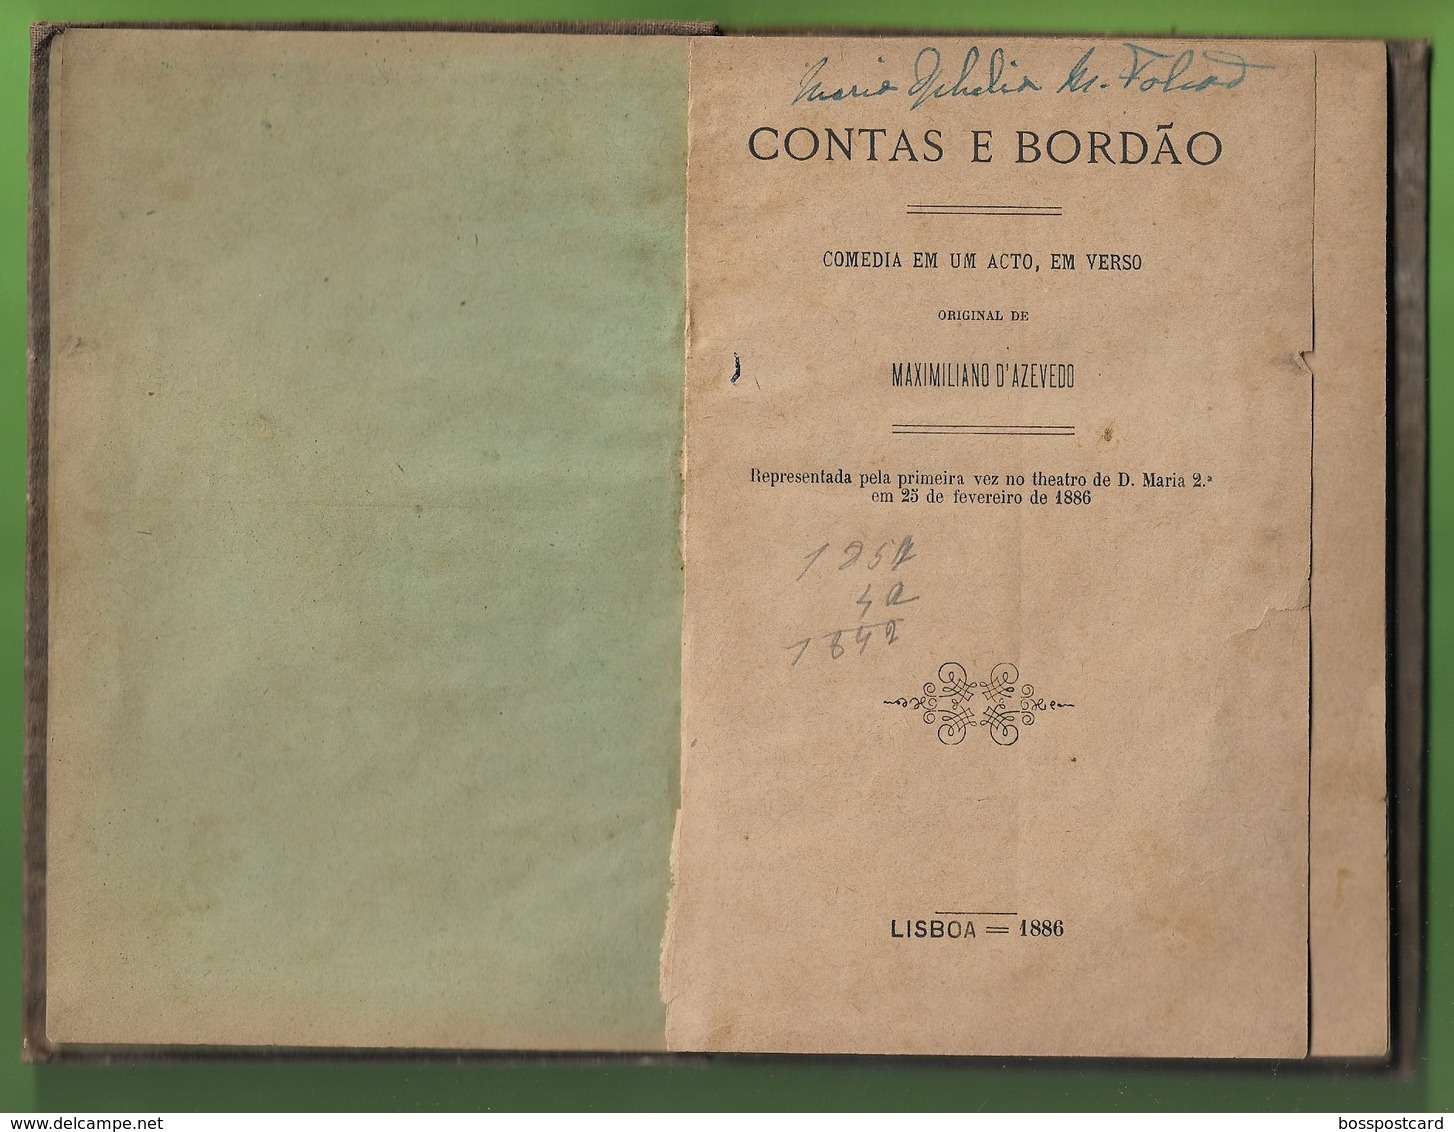 Lisboa - Contas E Bordão - Maximiliano D'Azevedo, 1886 - Teatro - Portugal - Théâtre